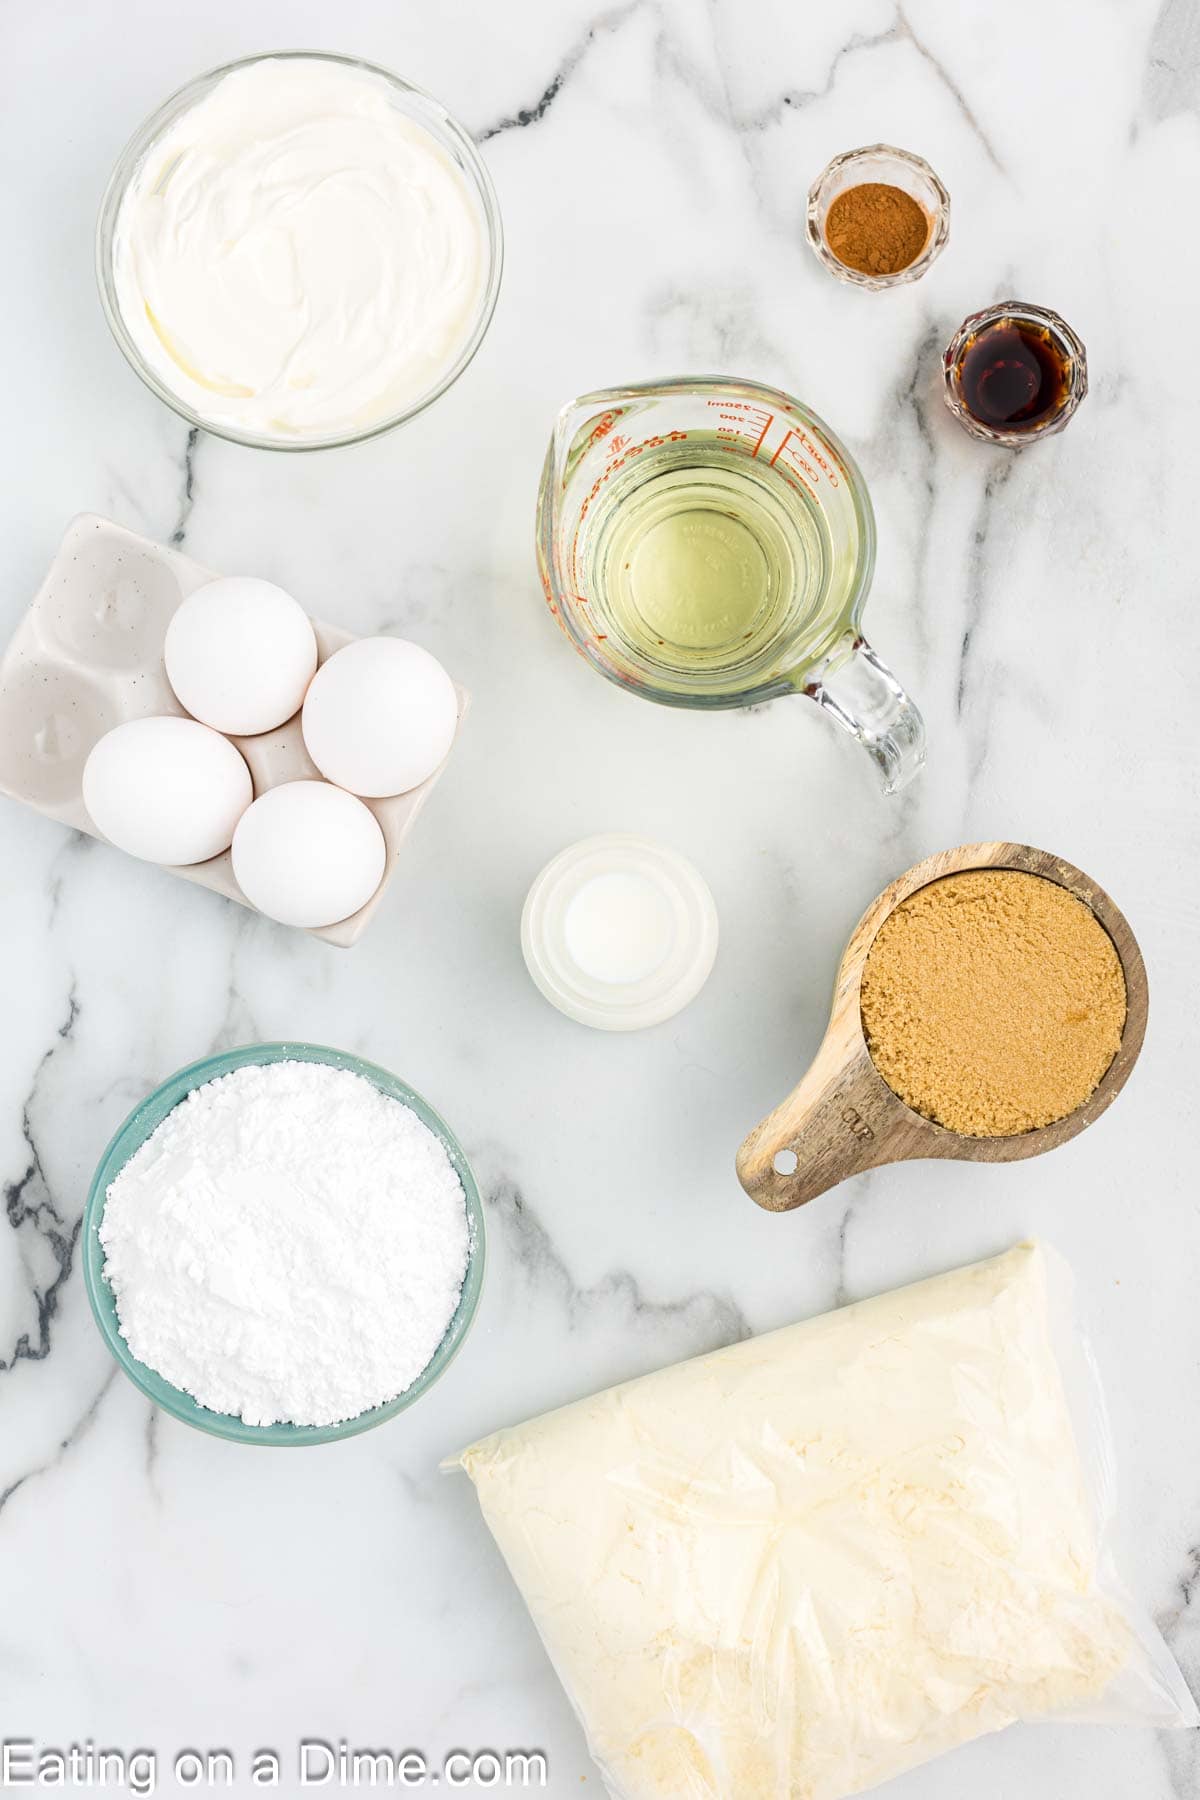 Honey Bun Cake Ingredients - Cake Mix, eggs, vanilla extract, sour cream, oil, brown sugar, cinnamon, powdered sugar, milk